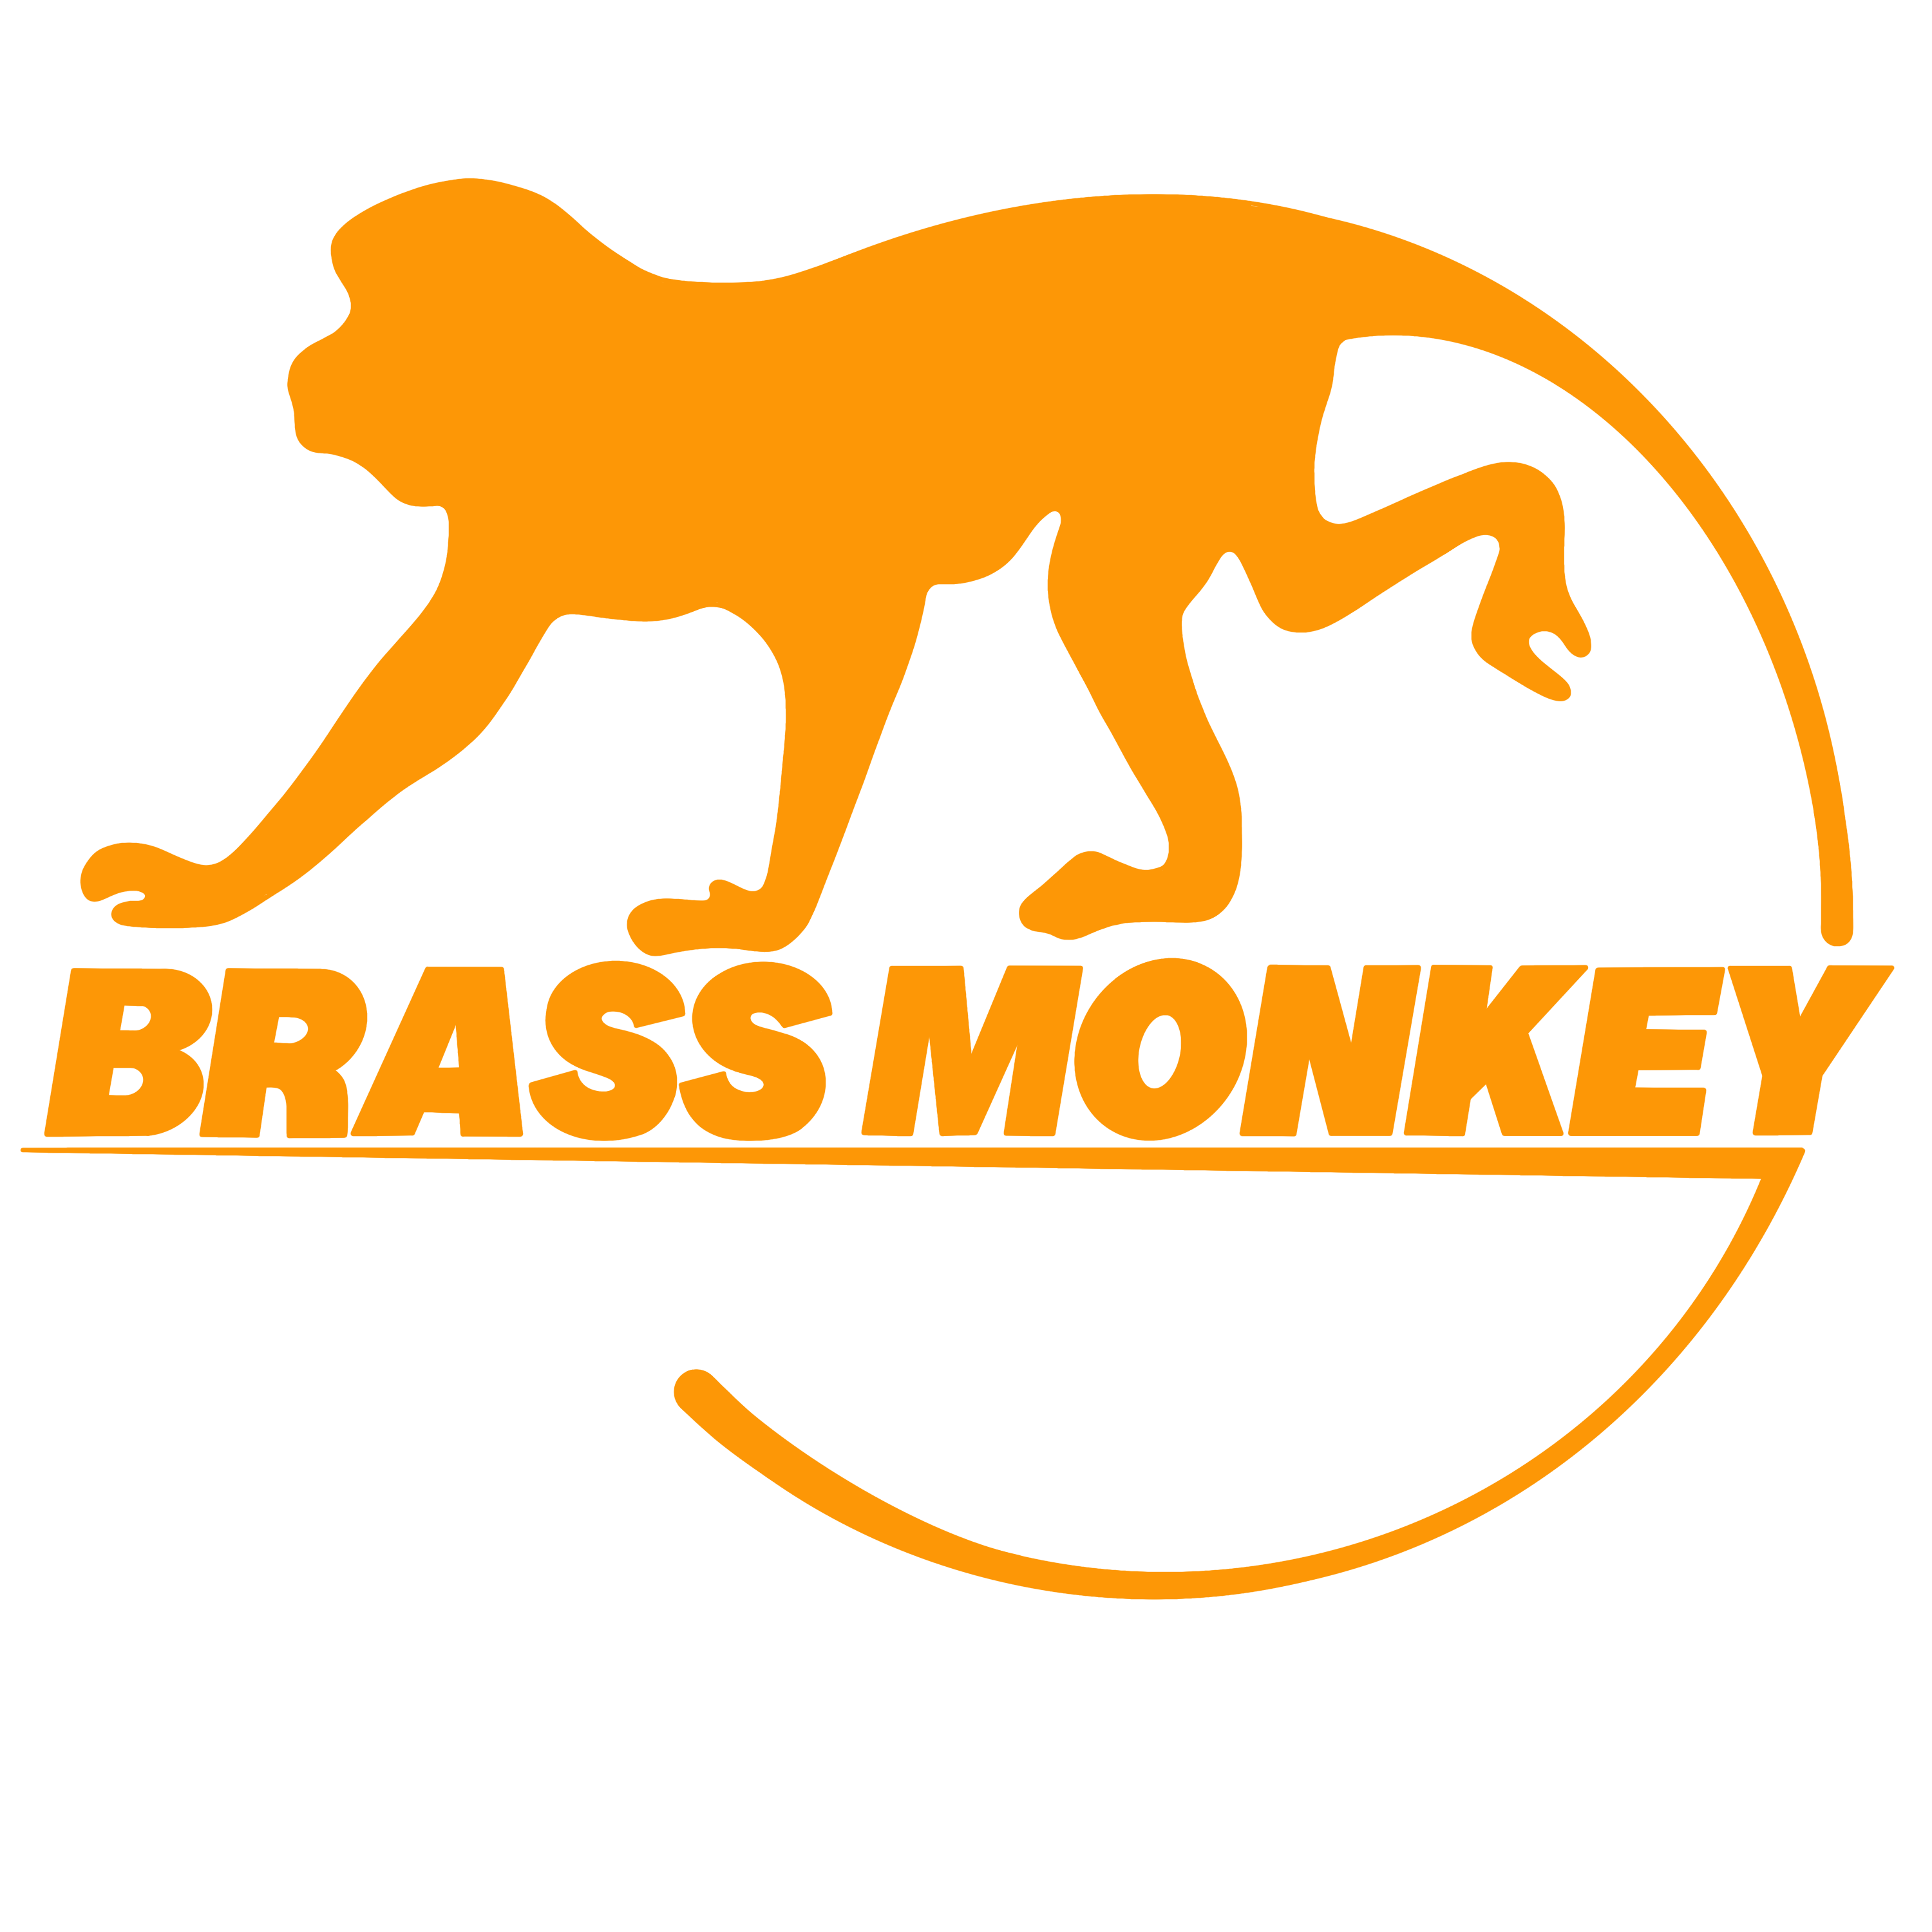 Brass Monkey - San Antonio, TX 78212 - (210)480-4722 | ShowMeLocal.com